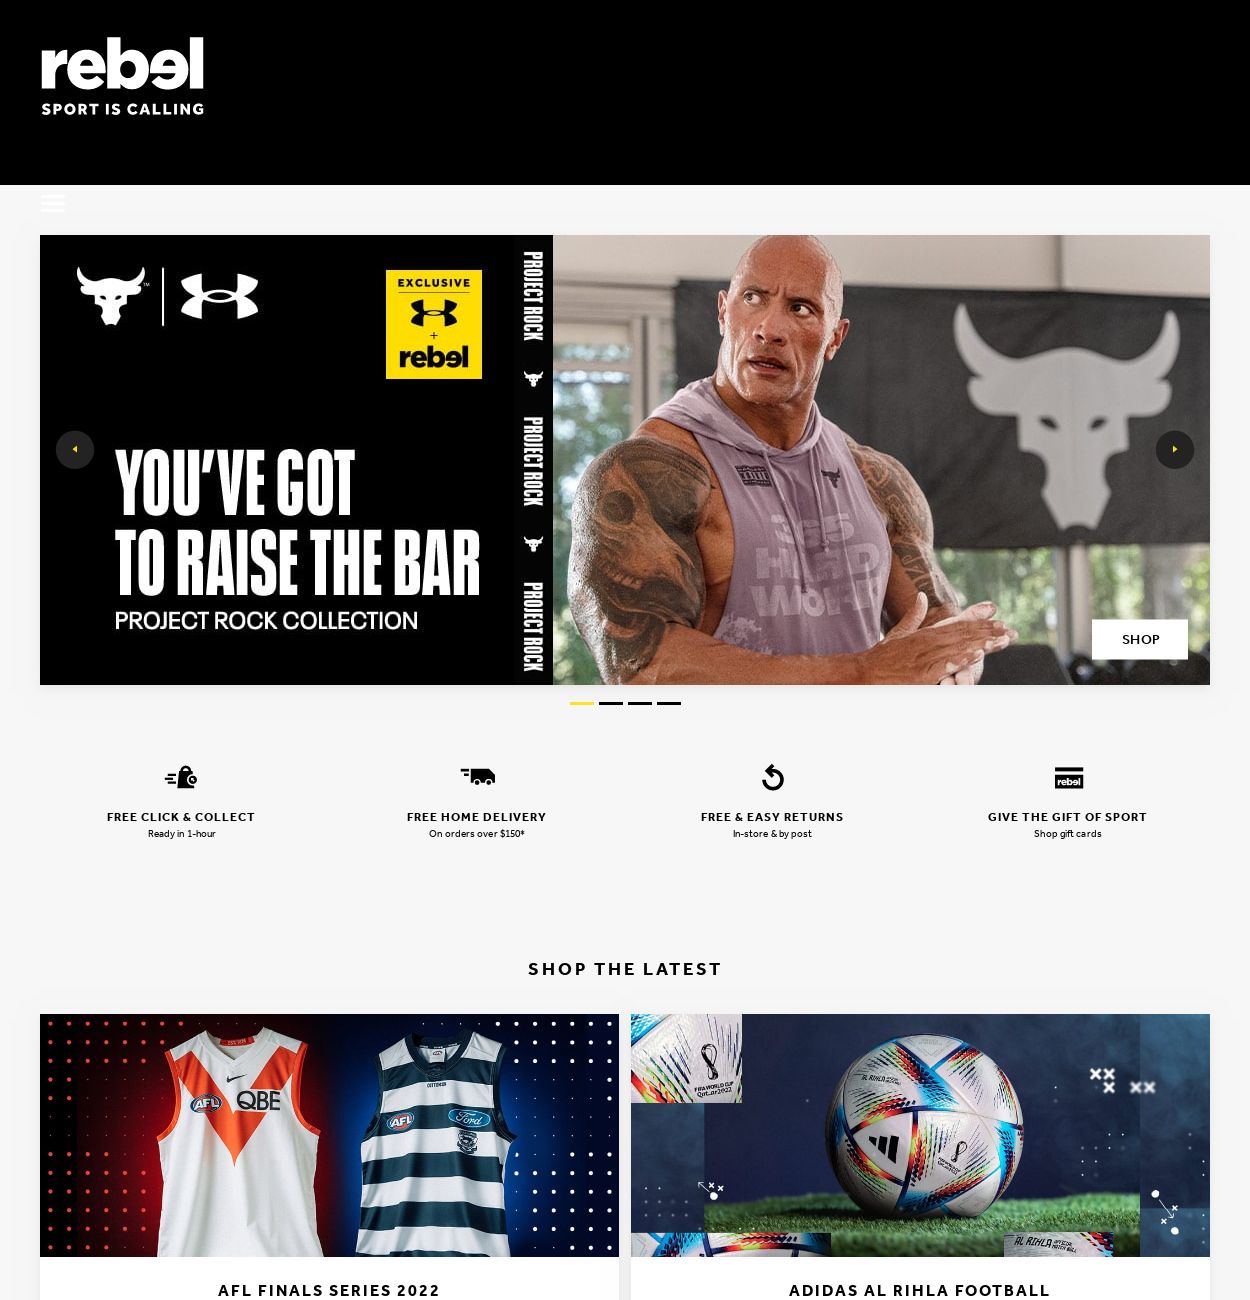 Rebel Sport Promotional catalogues